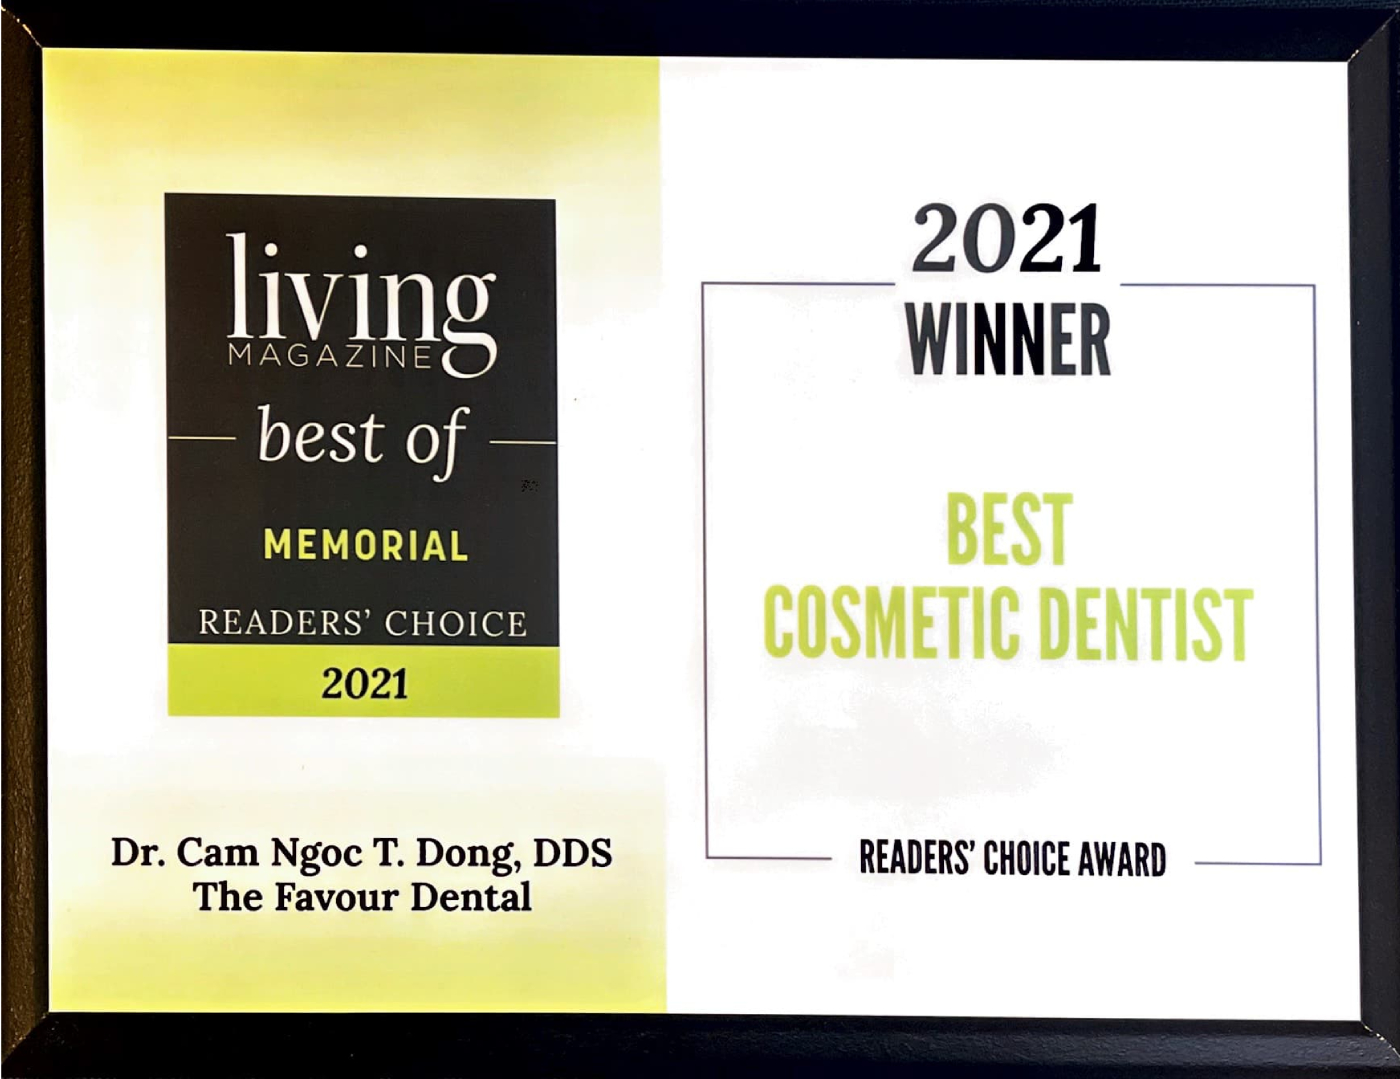 Best Cosmetic Dentist 2021 Award